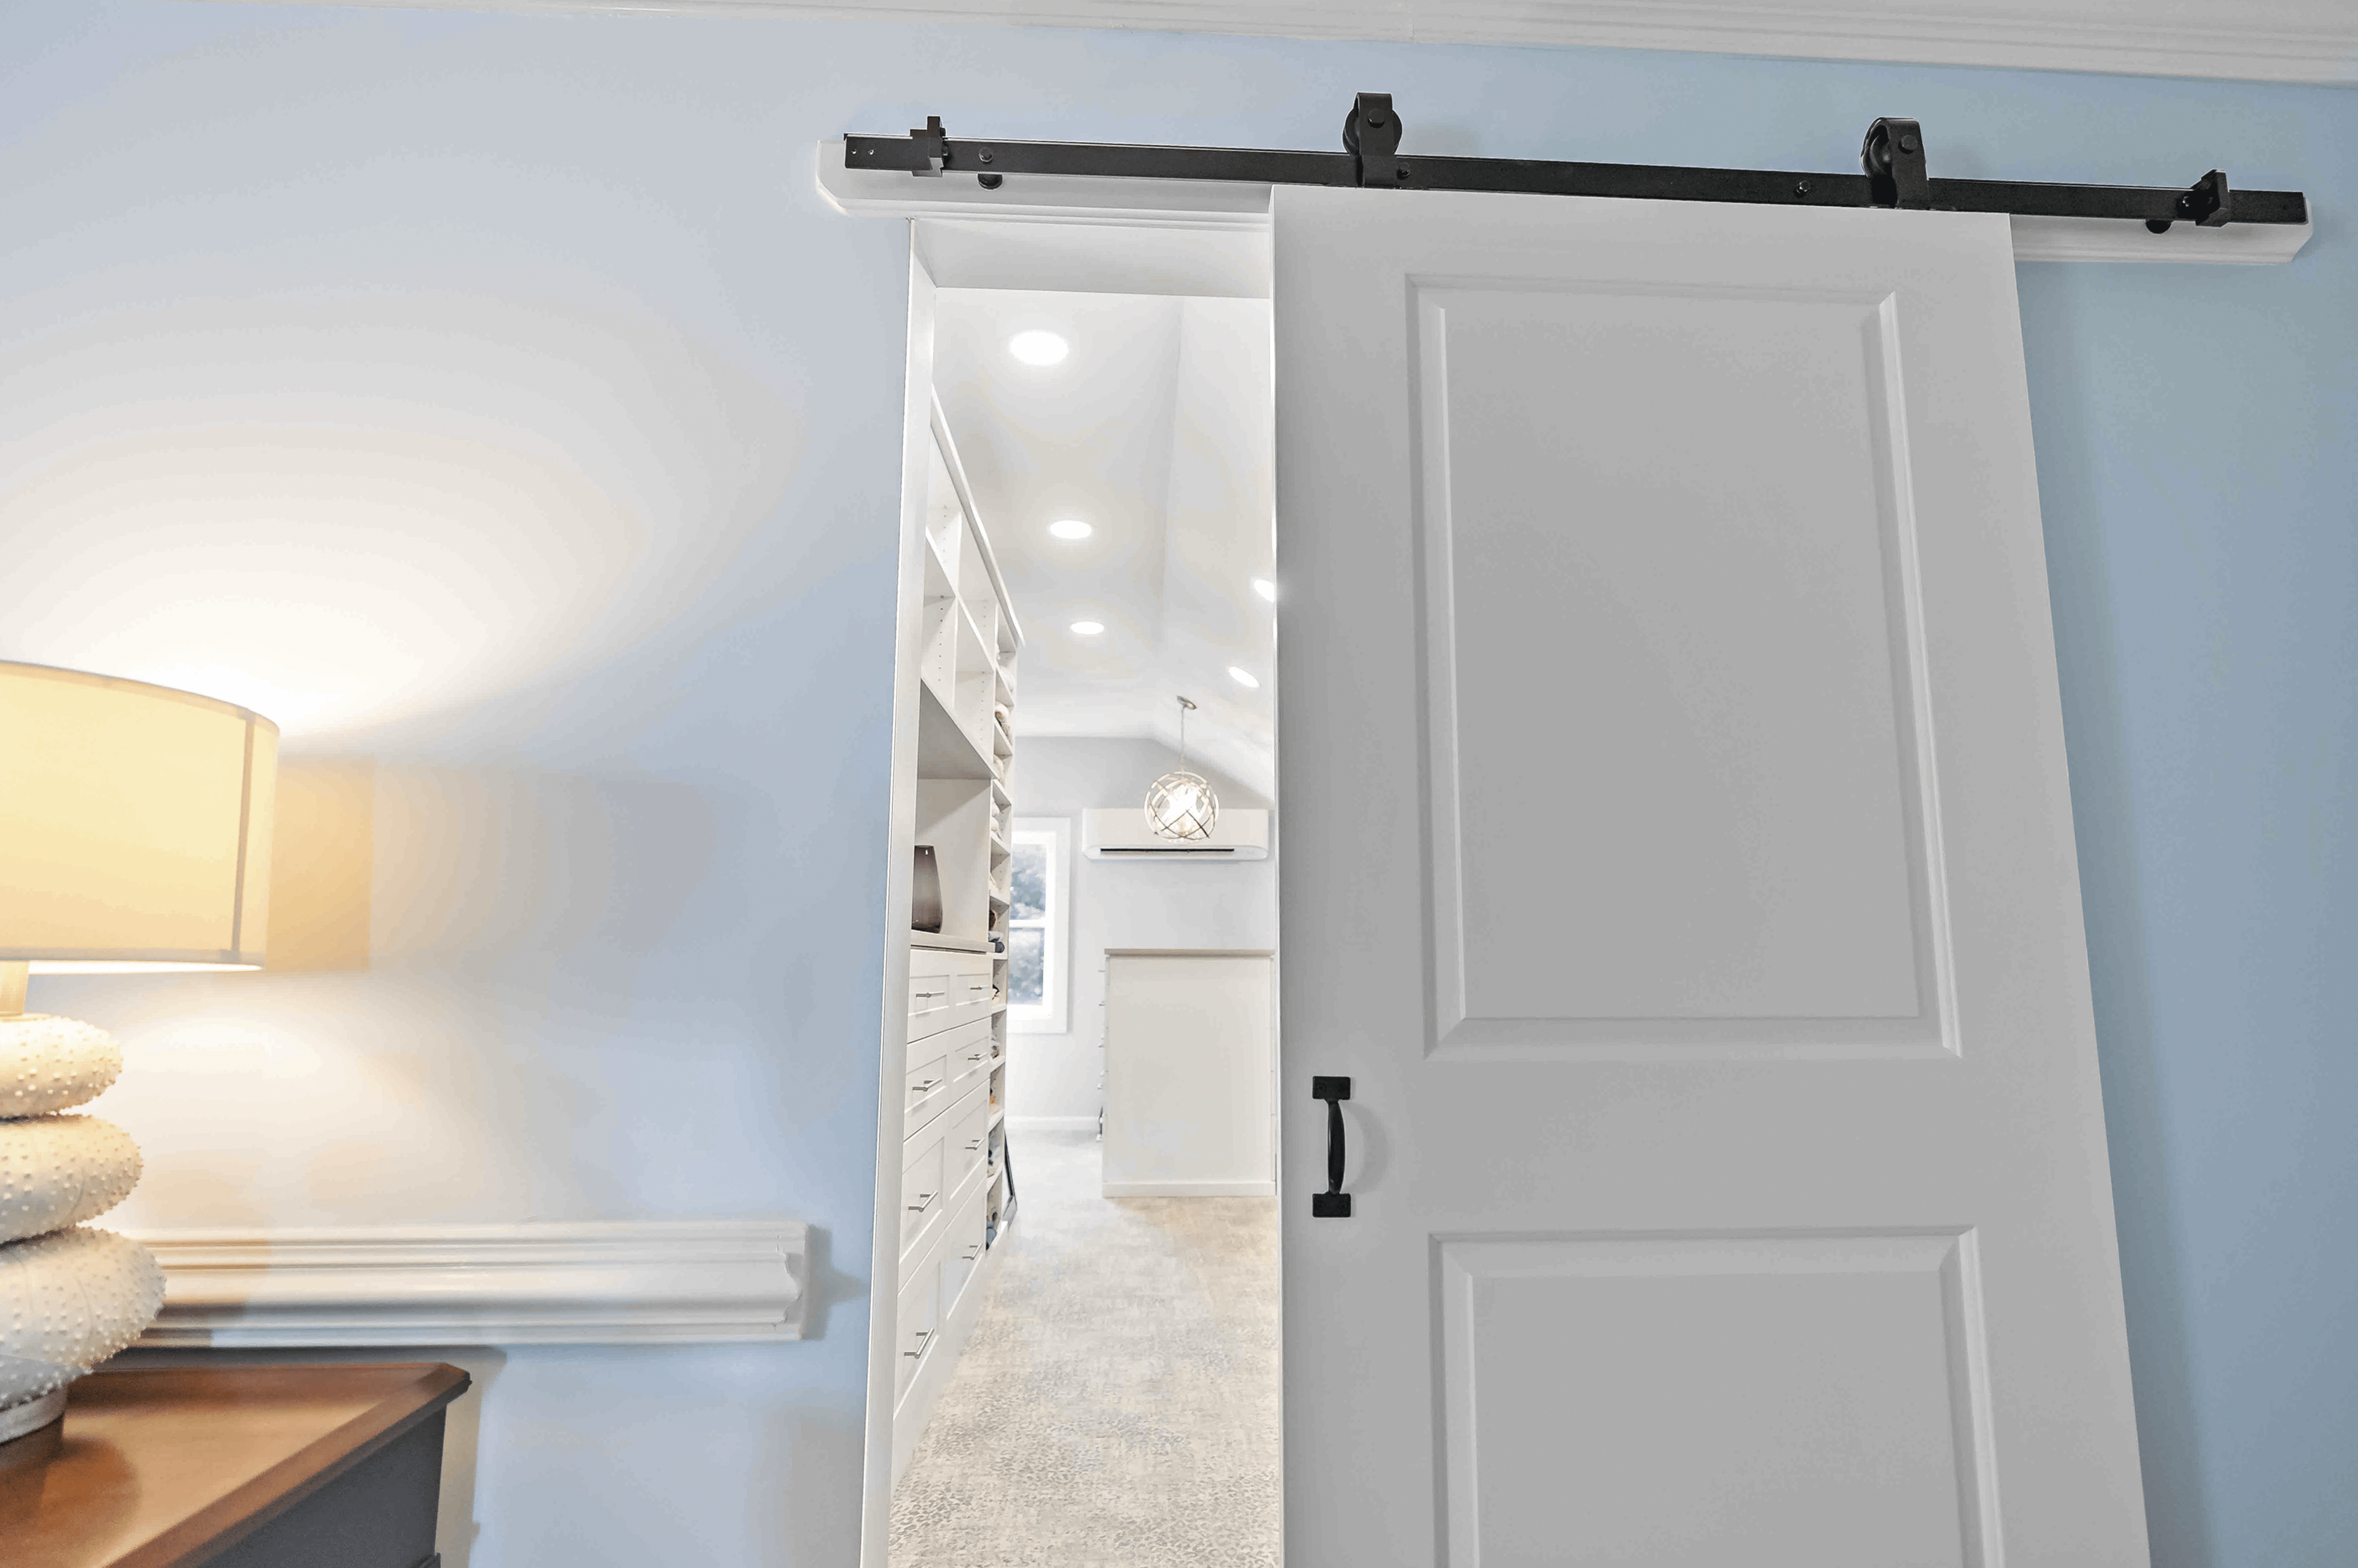 Sliding barn door to enter walk-in closet